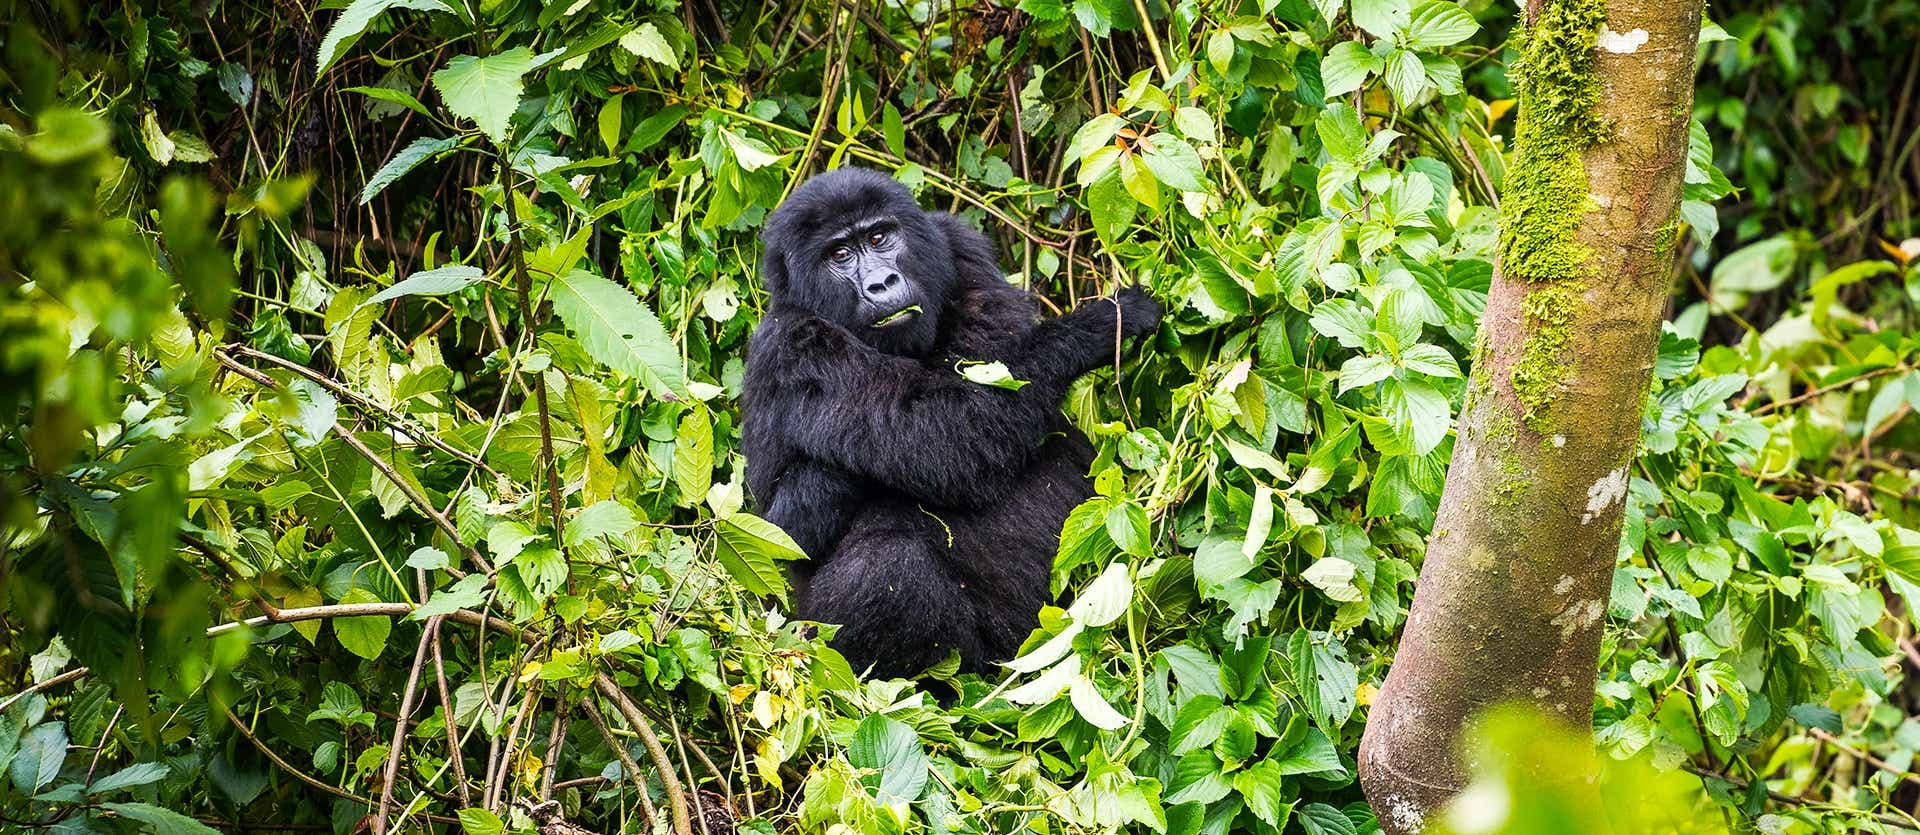 Mountain Gorilla <span class="iconos separador"></span> Bwindi Impenetrable Forest National Park <span class="iconos separador"></span> Uganda